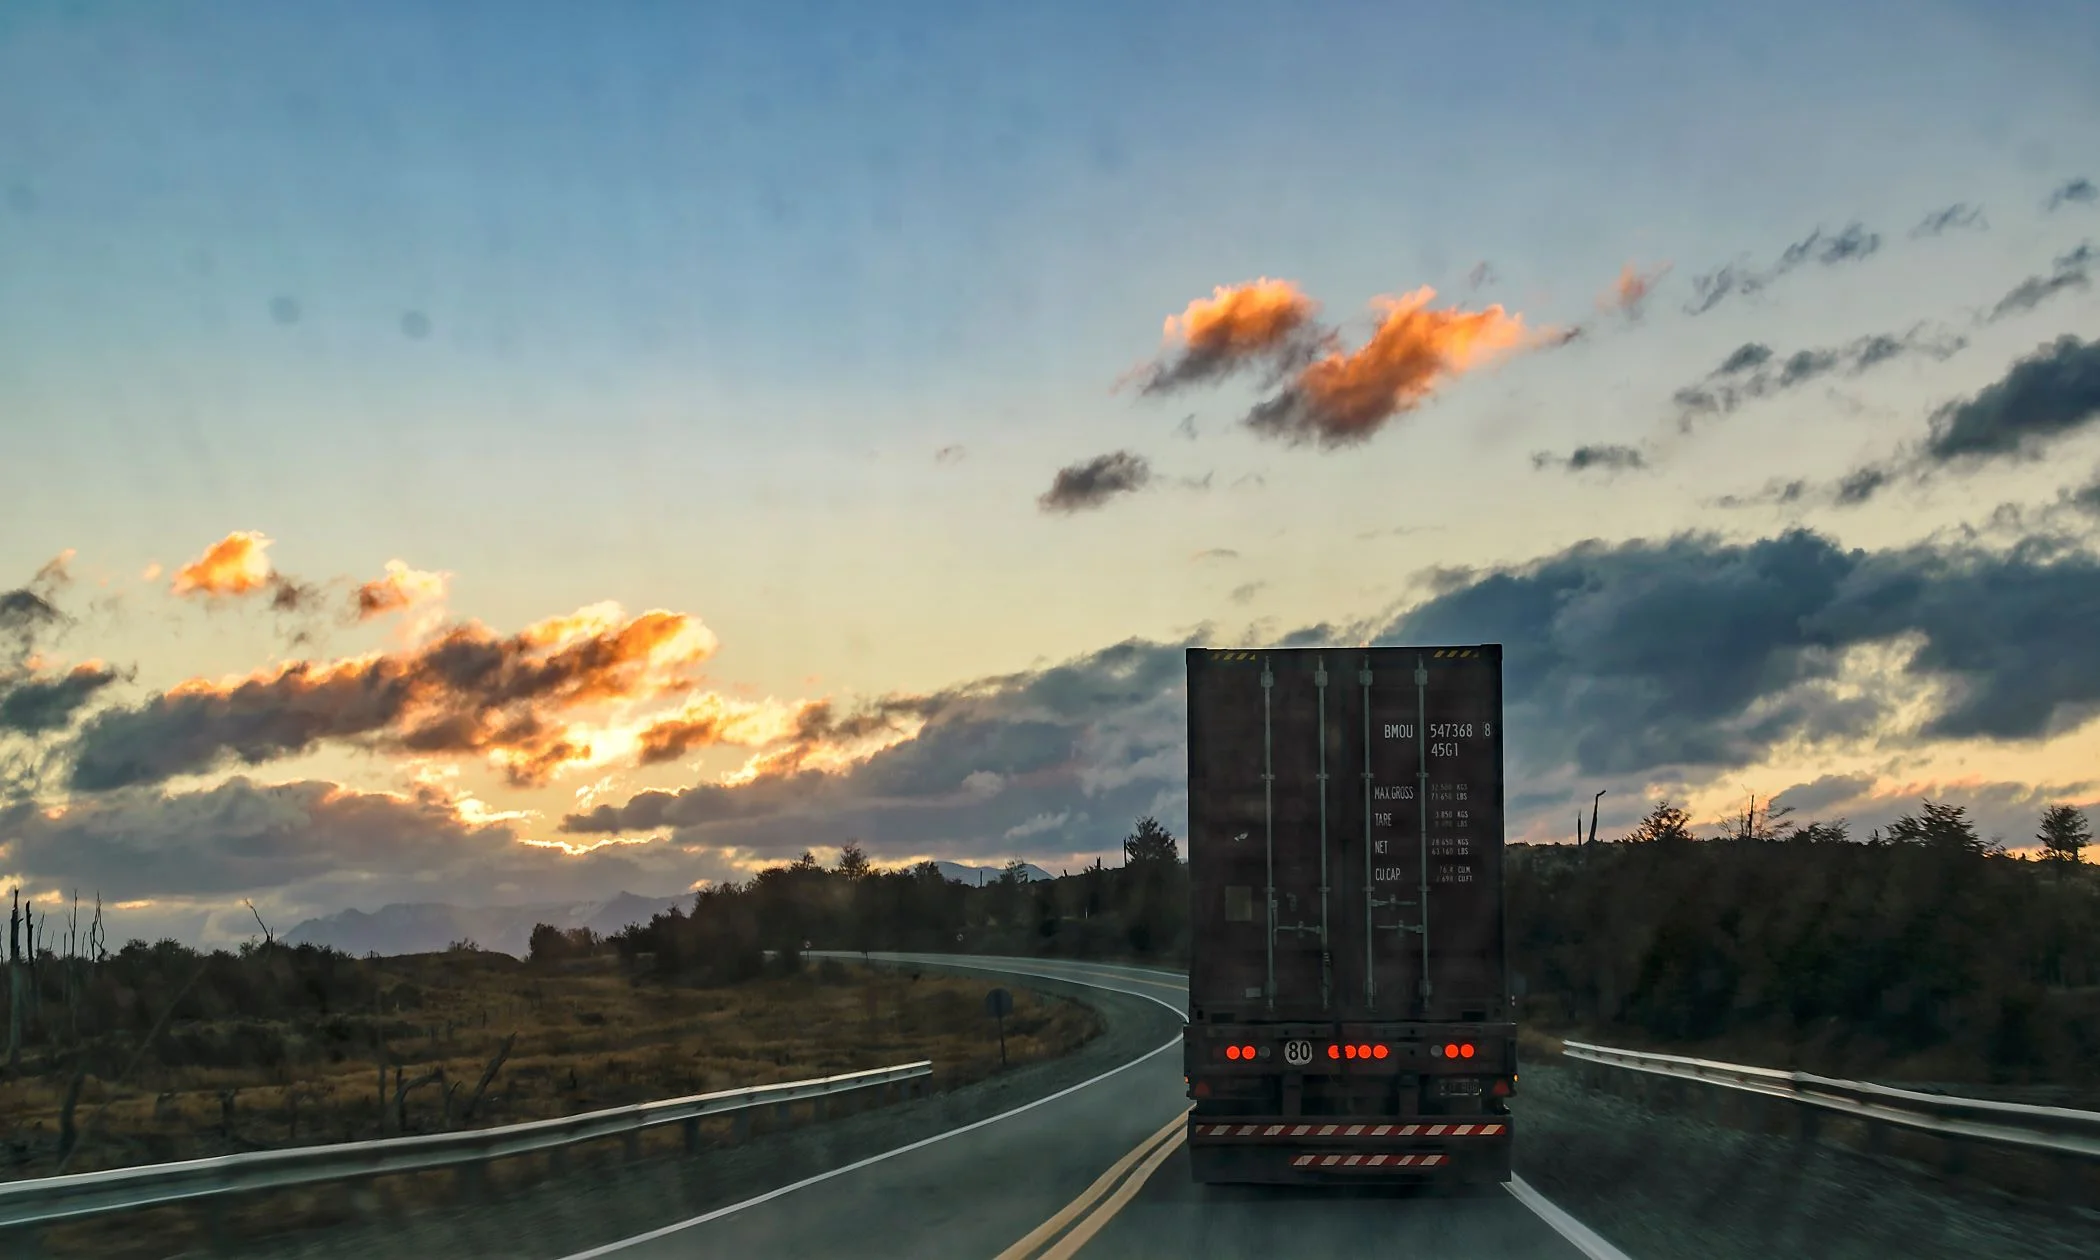 A transport truck driving along a hightway during sunset.